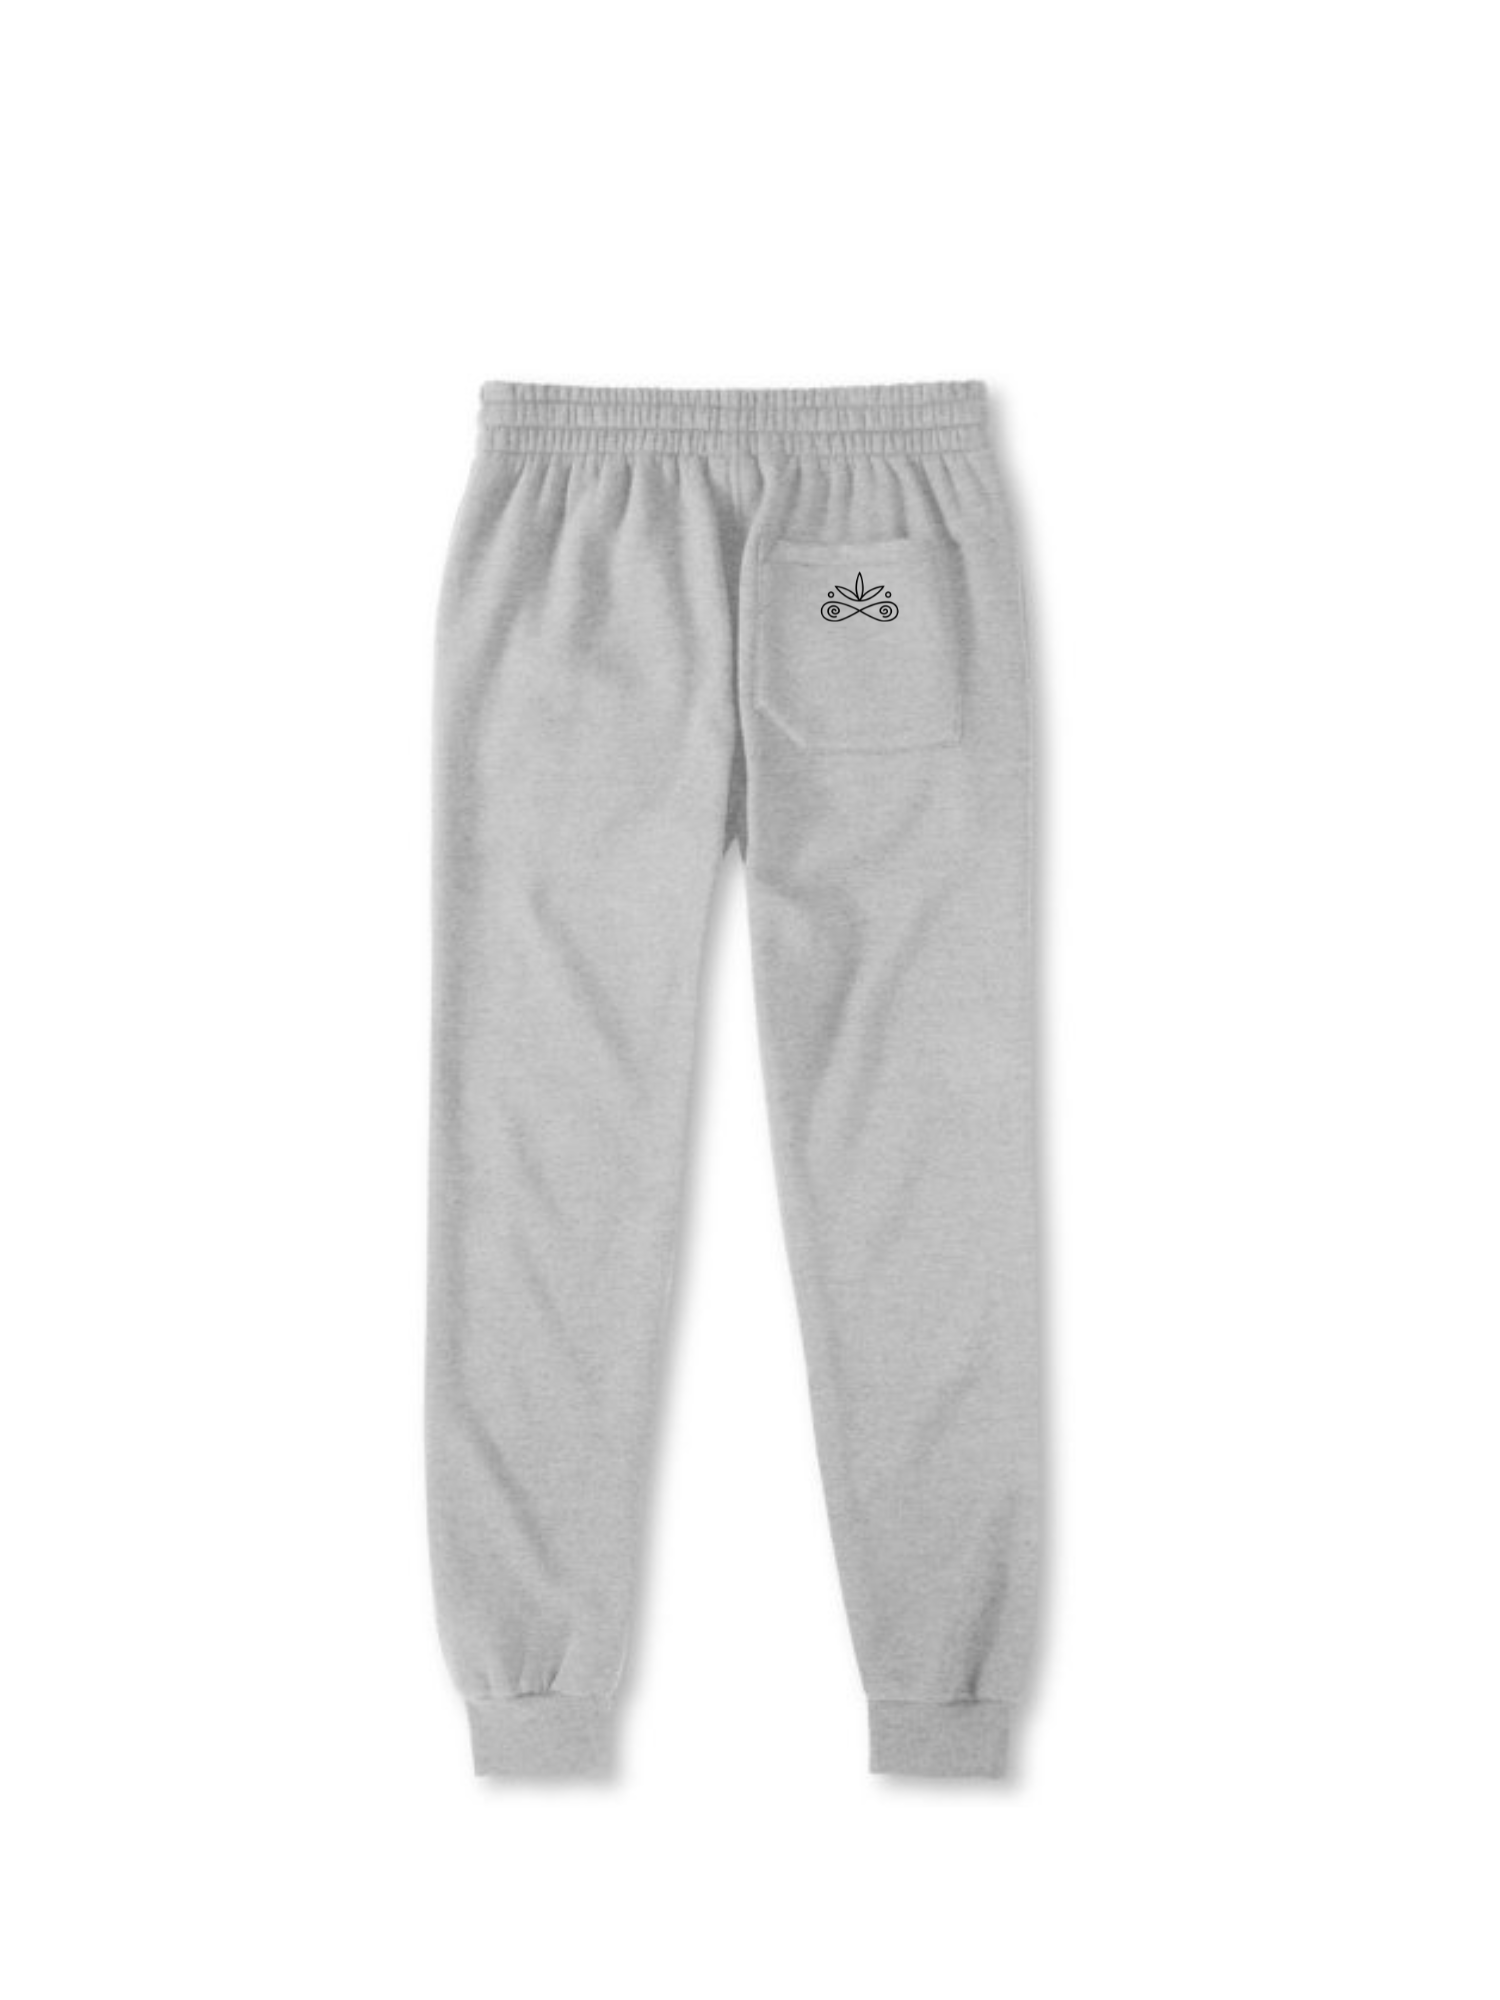 LIF Grey  Pants